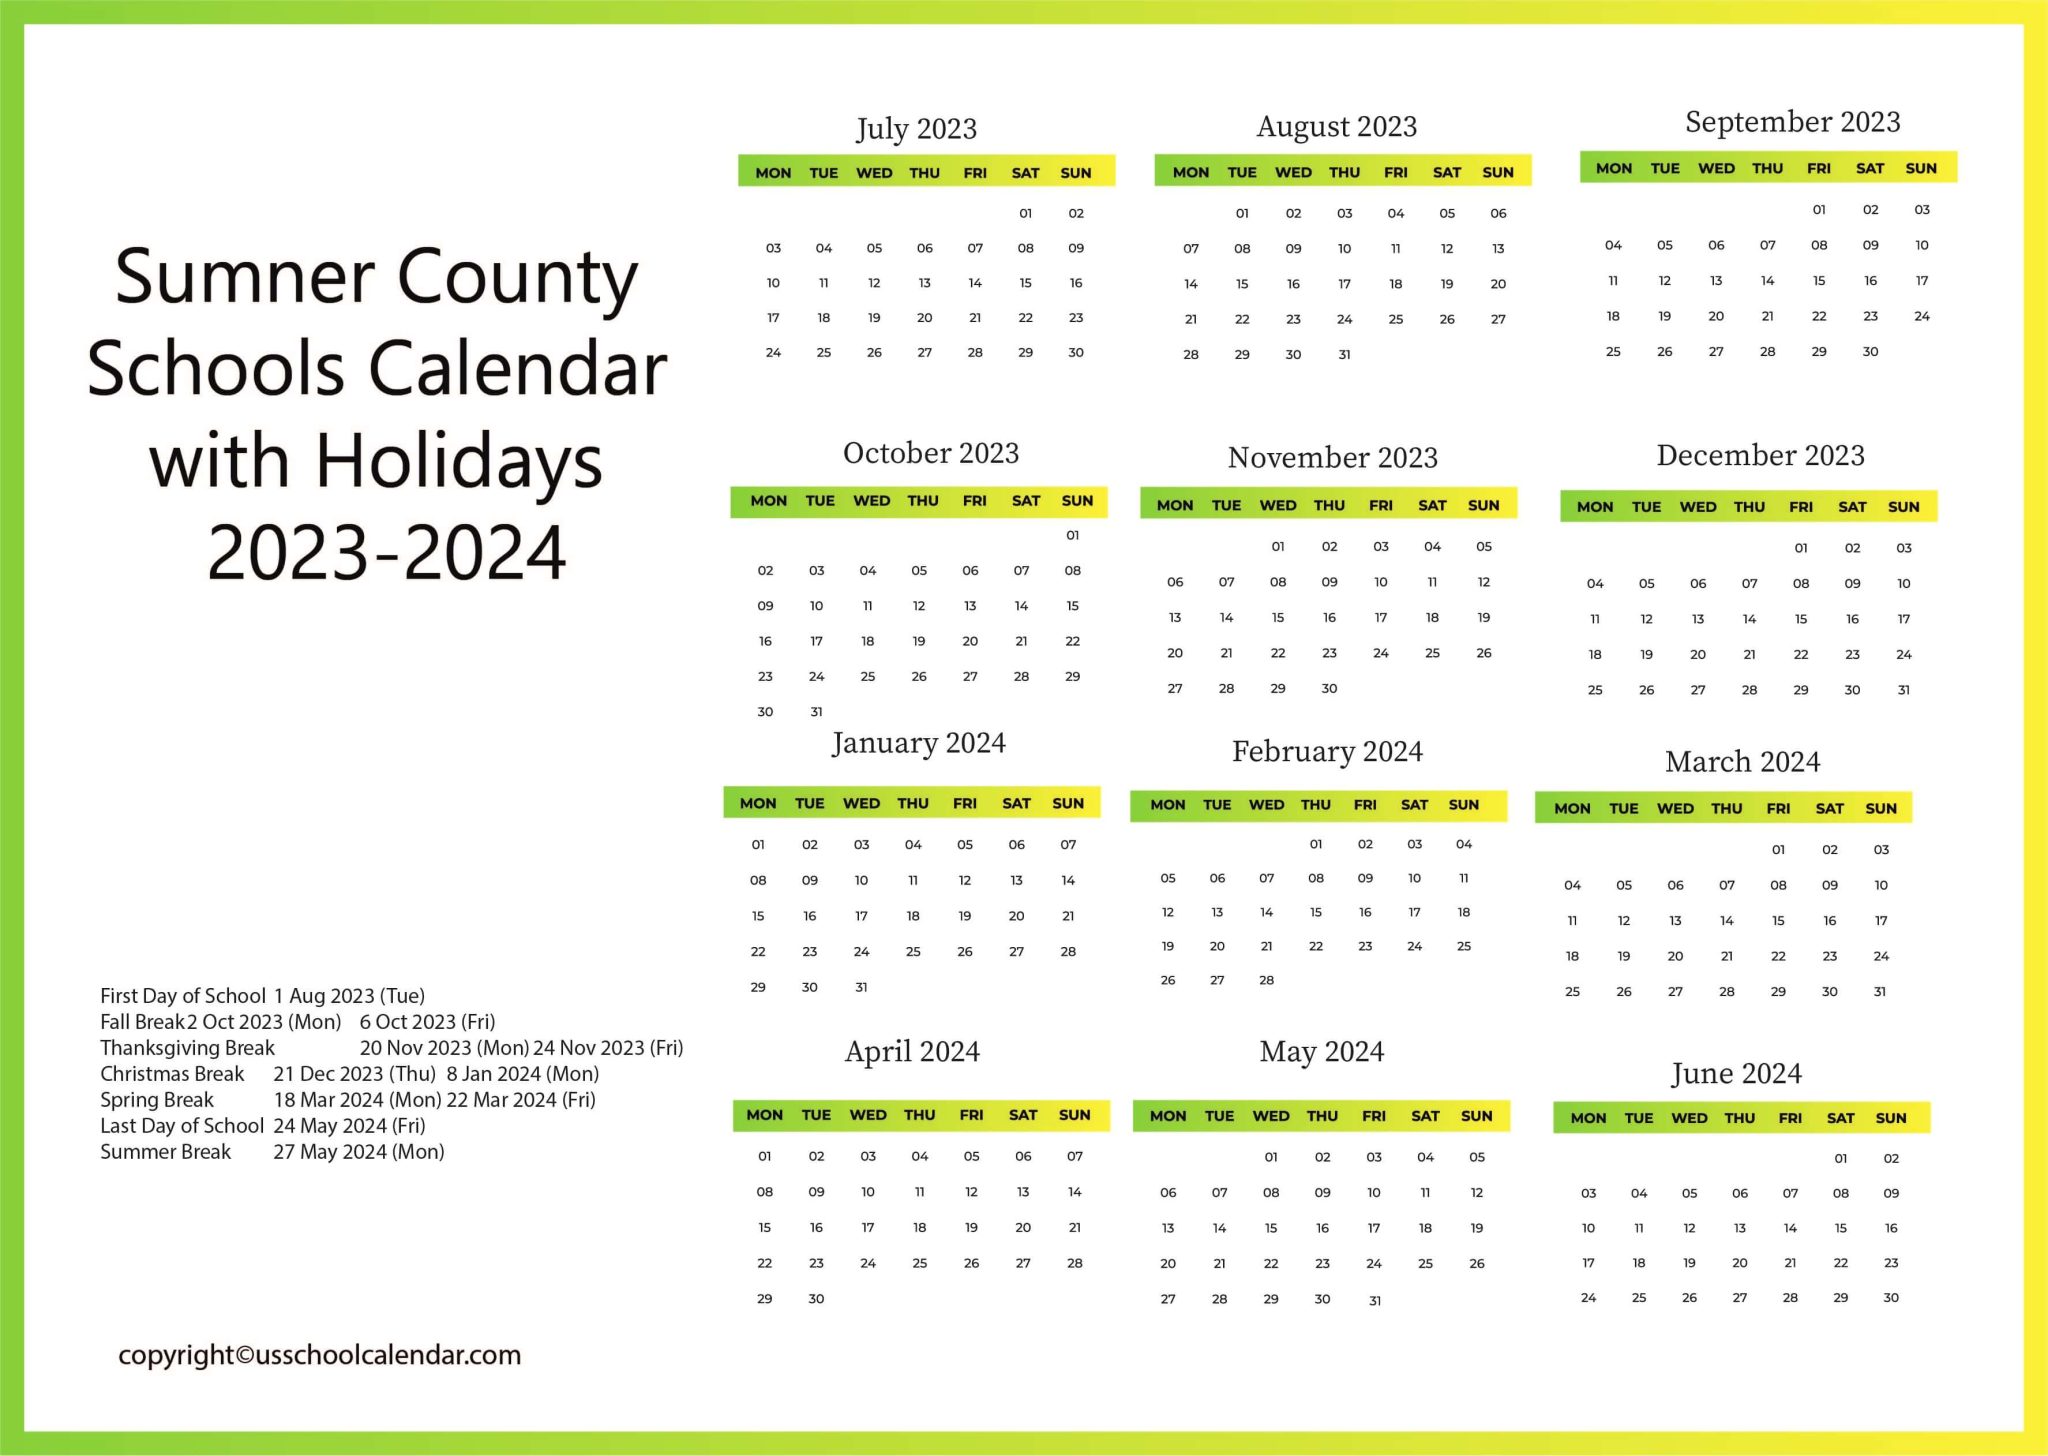 sumner-county-schools-calendar-with-holidays-2023-2024